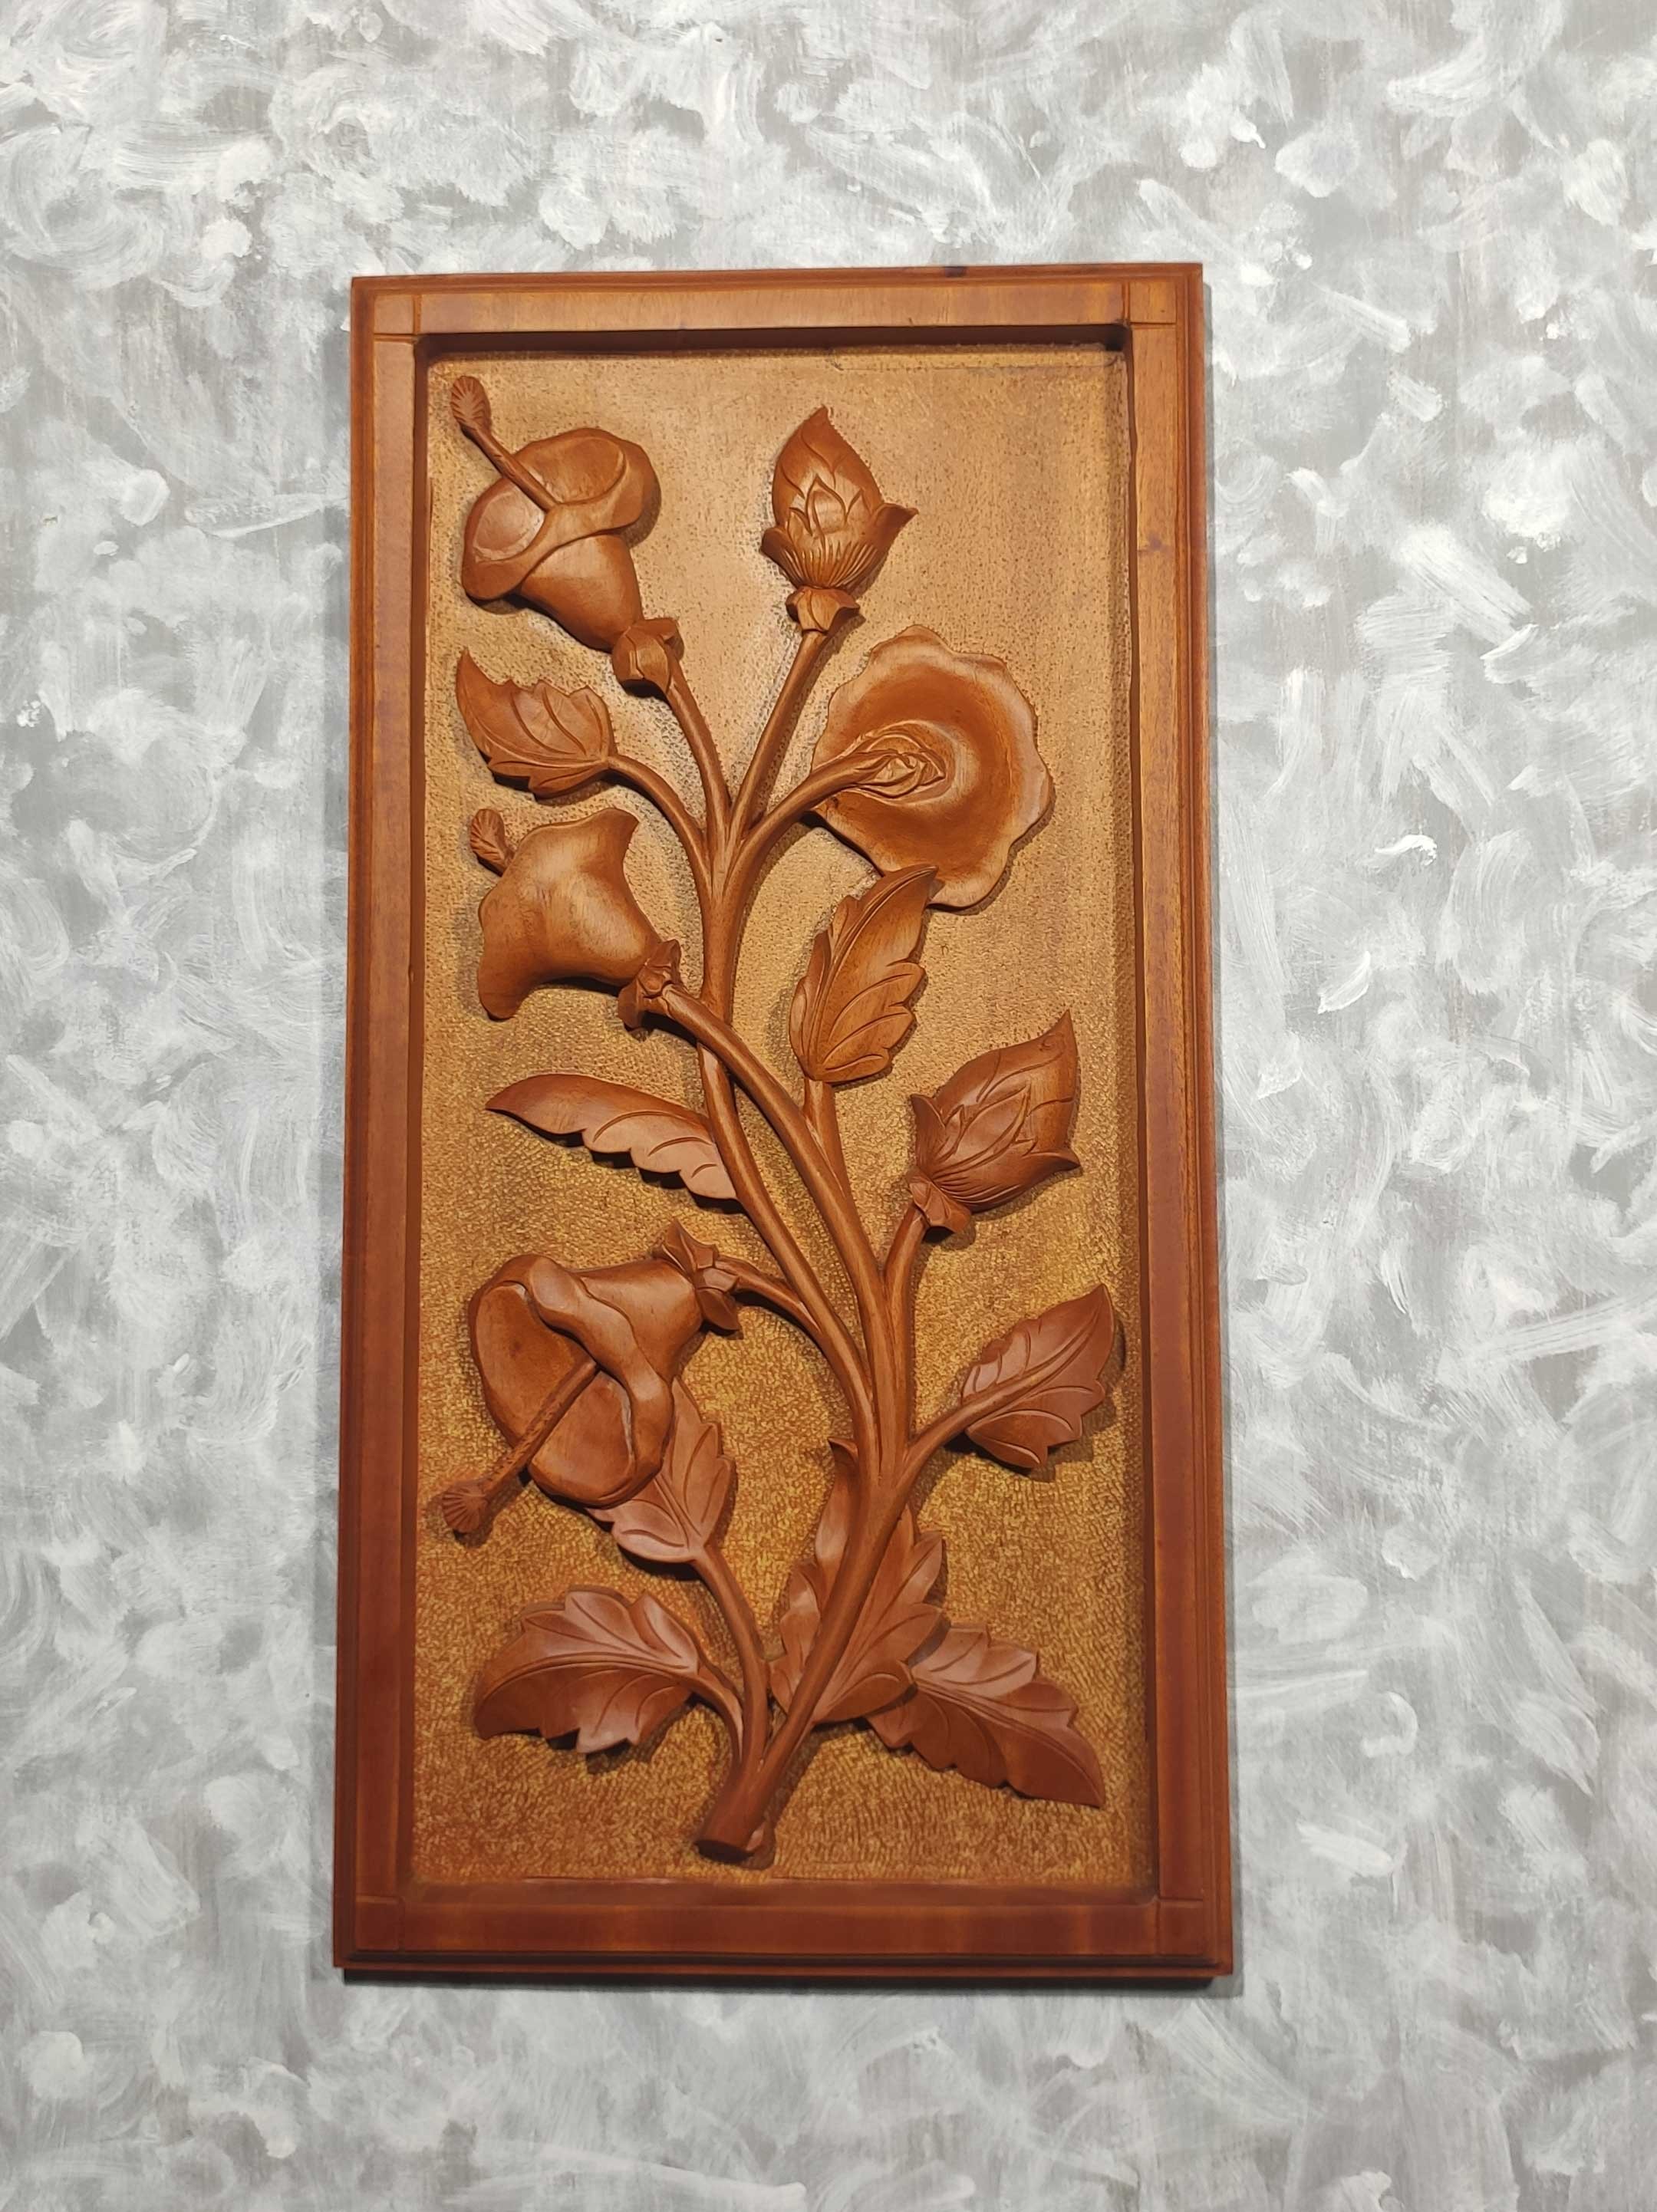 Shoe Flower Wood Carving WallArt by Widalath Arachchilage Jayathilaka